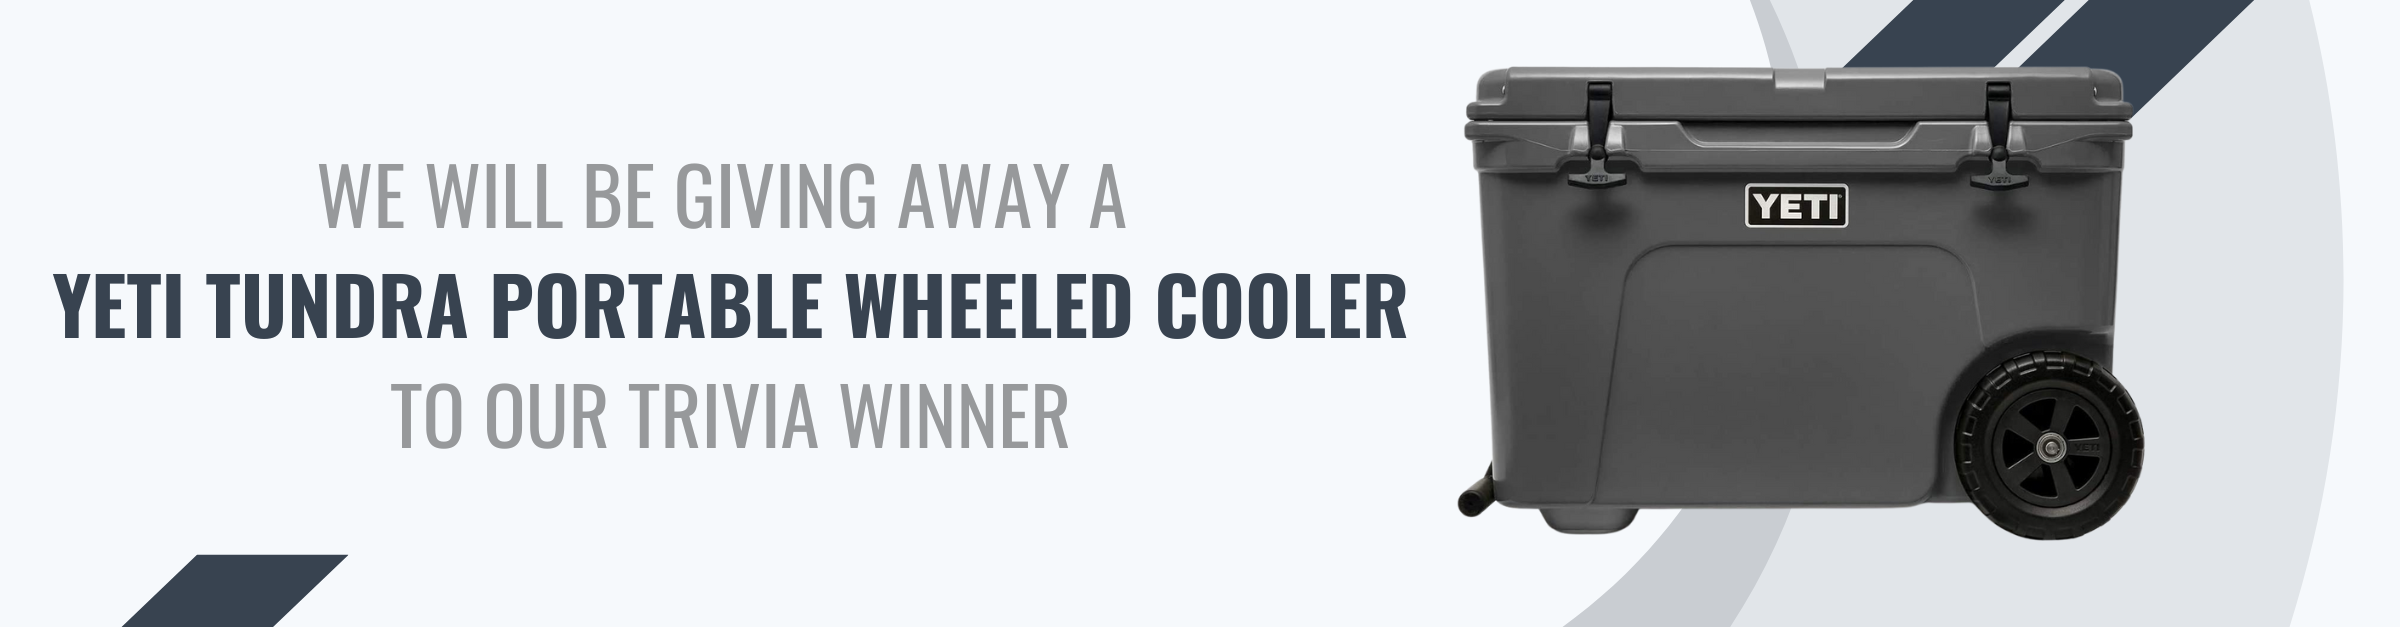 Win a Yeti Cooler with AstrodyneTDI